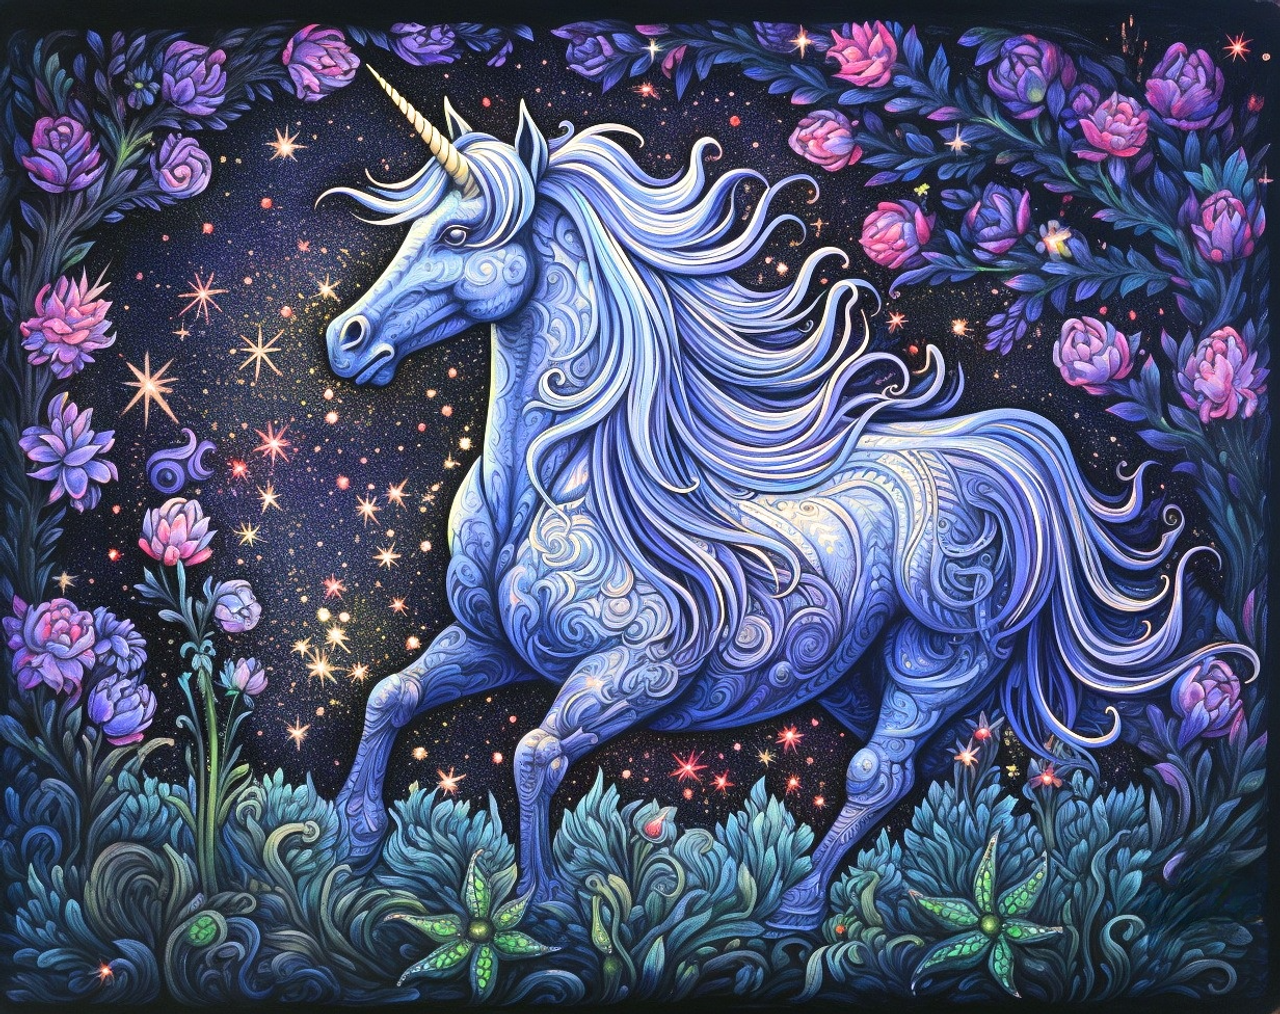 Diamond Painting - Abstract Unicorn